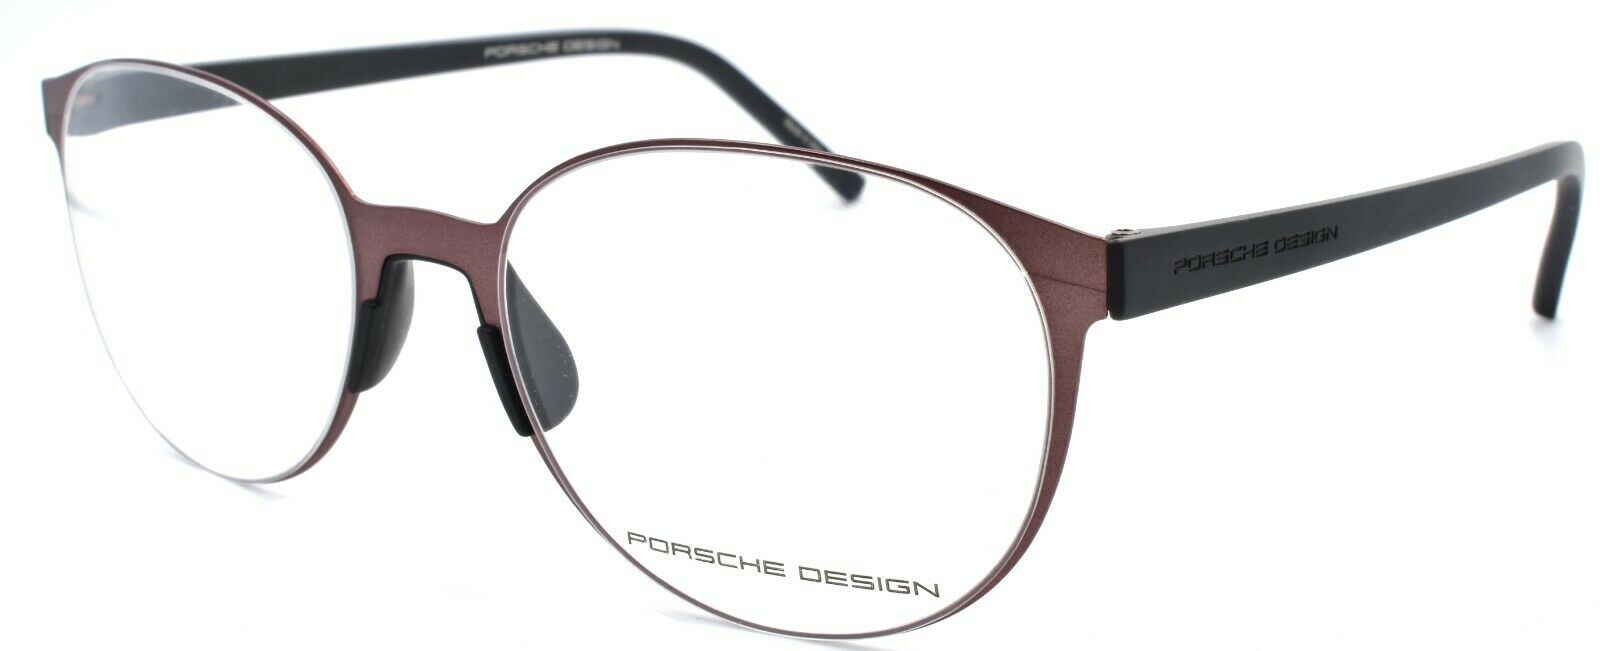 1-Porsche Design P8312 F Eyeglasses Frames 53-19-145 Burgundy-4046901686031-IKSpecs